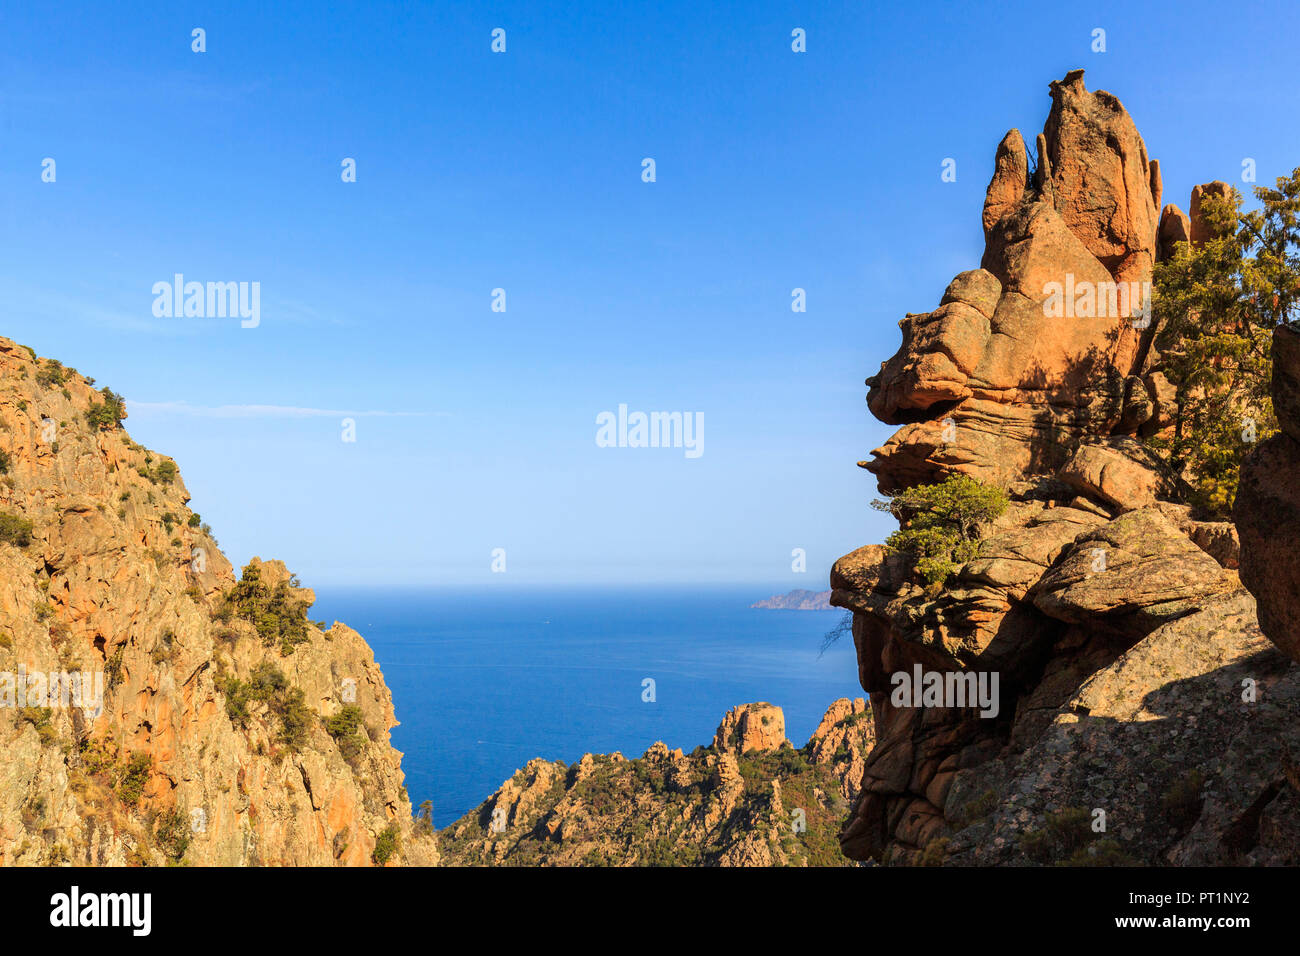 The red rocks of Calanchi di Piana (Les calanques de Piana), gulf of Porto, Southern Corsica, France Stock Photo